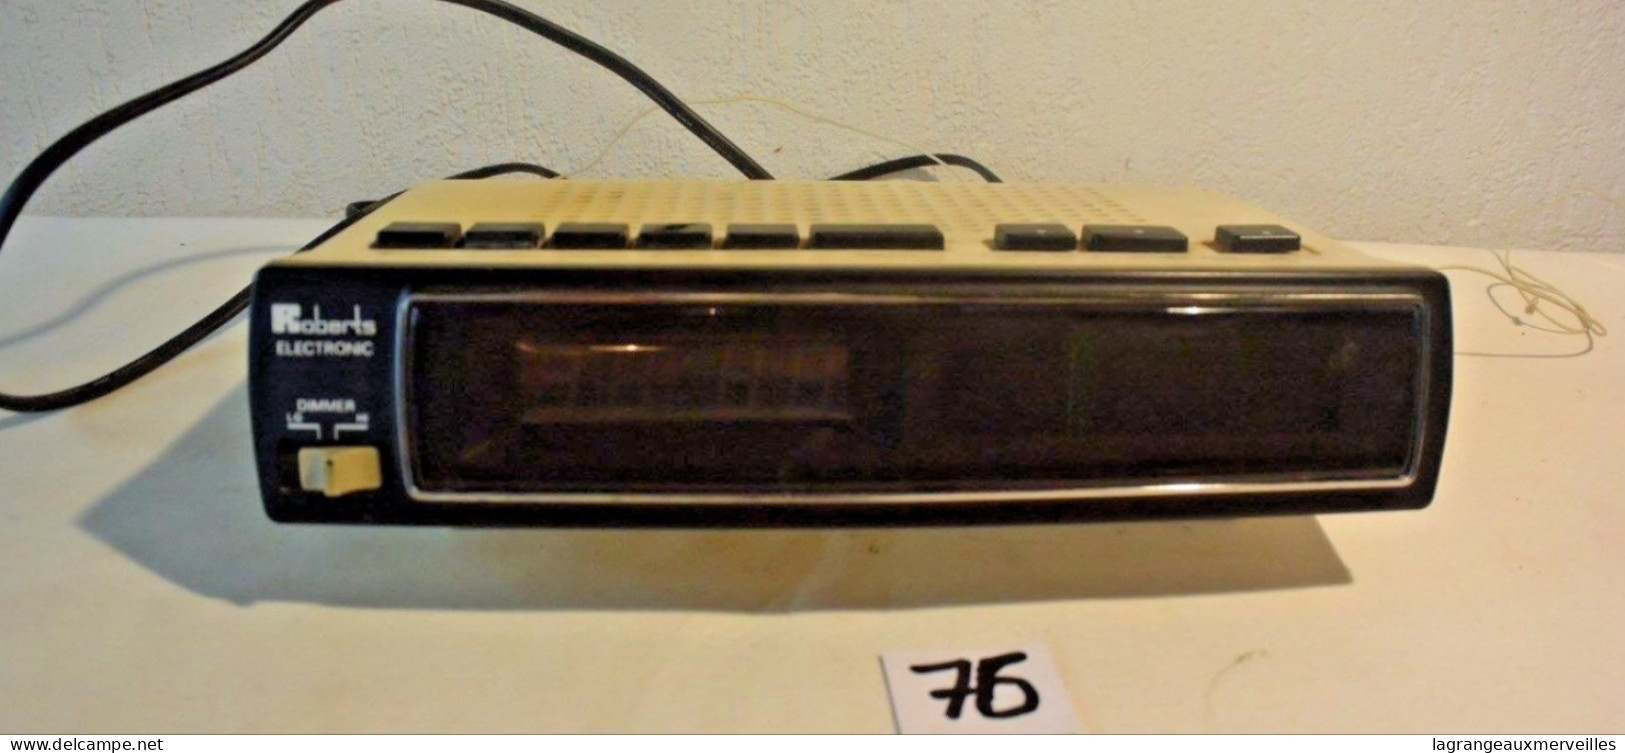 C76 Ancien appareil radio réveil Roberts electronic